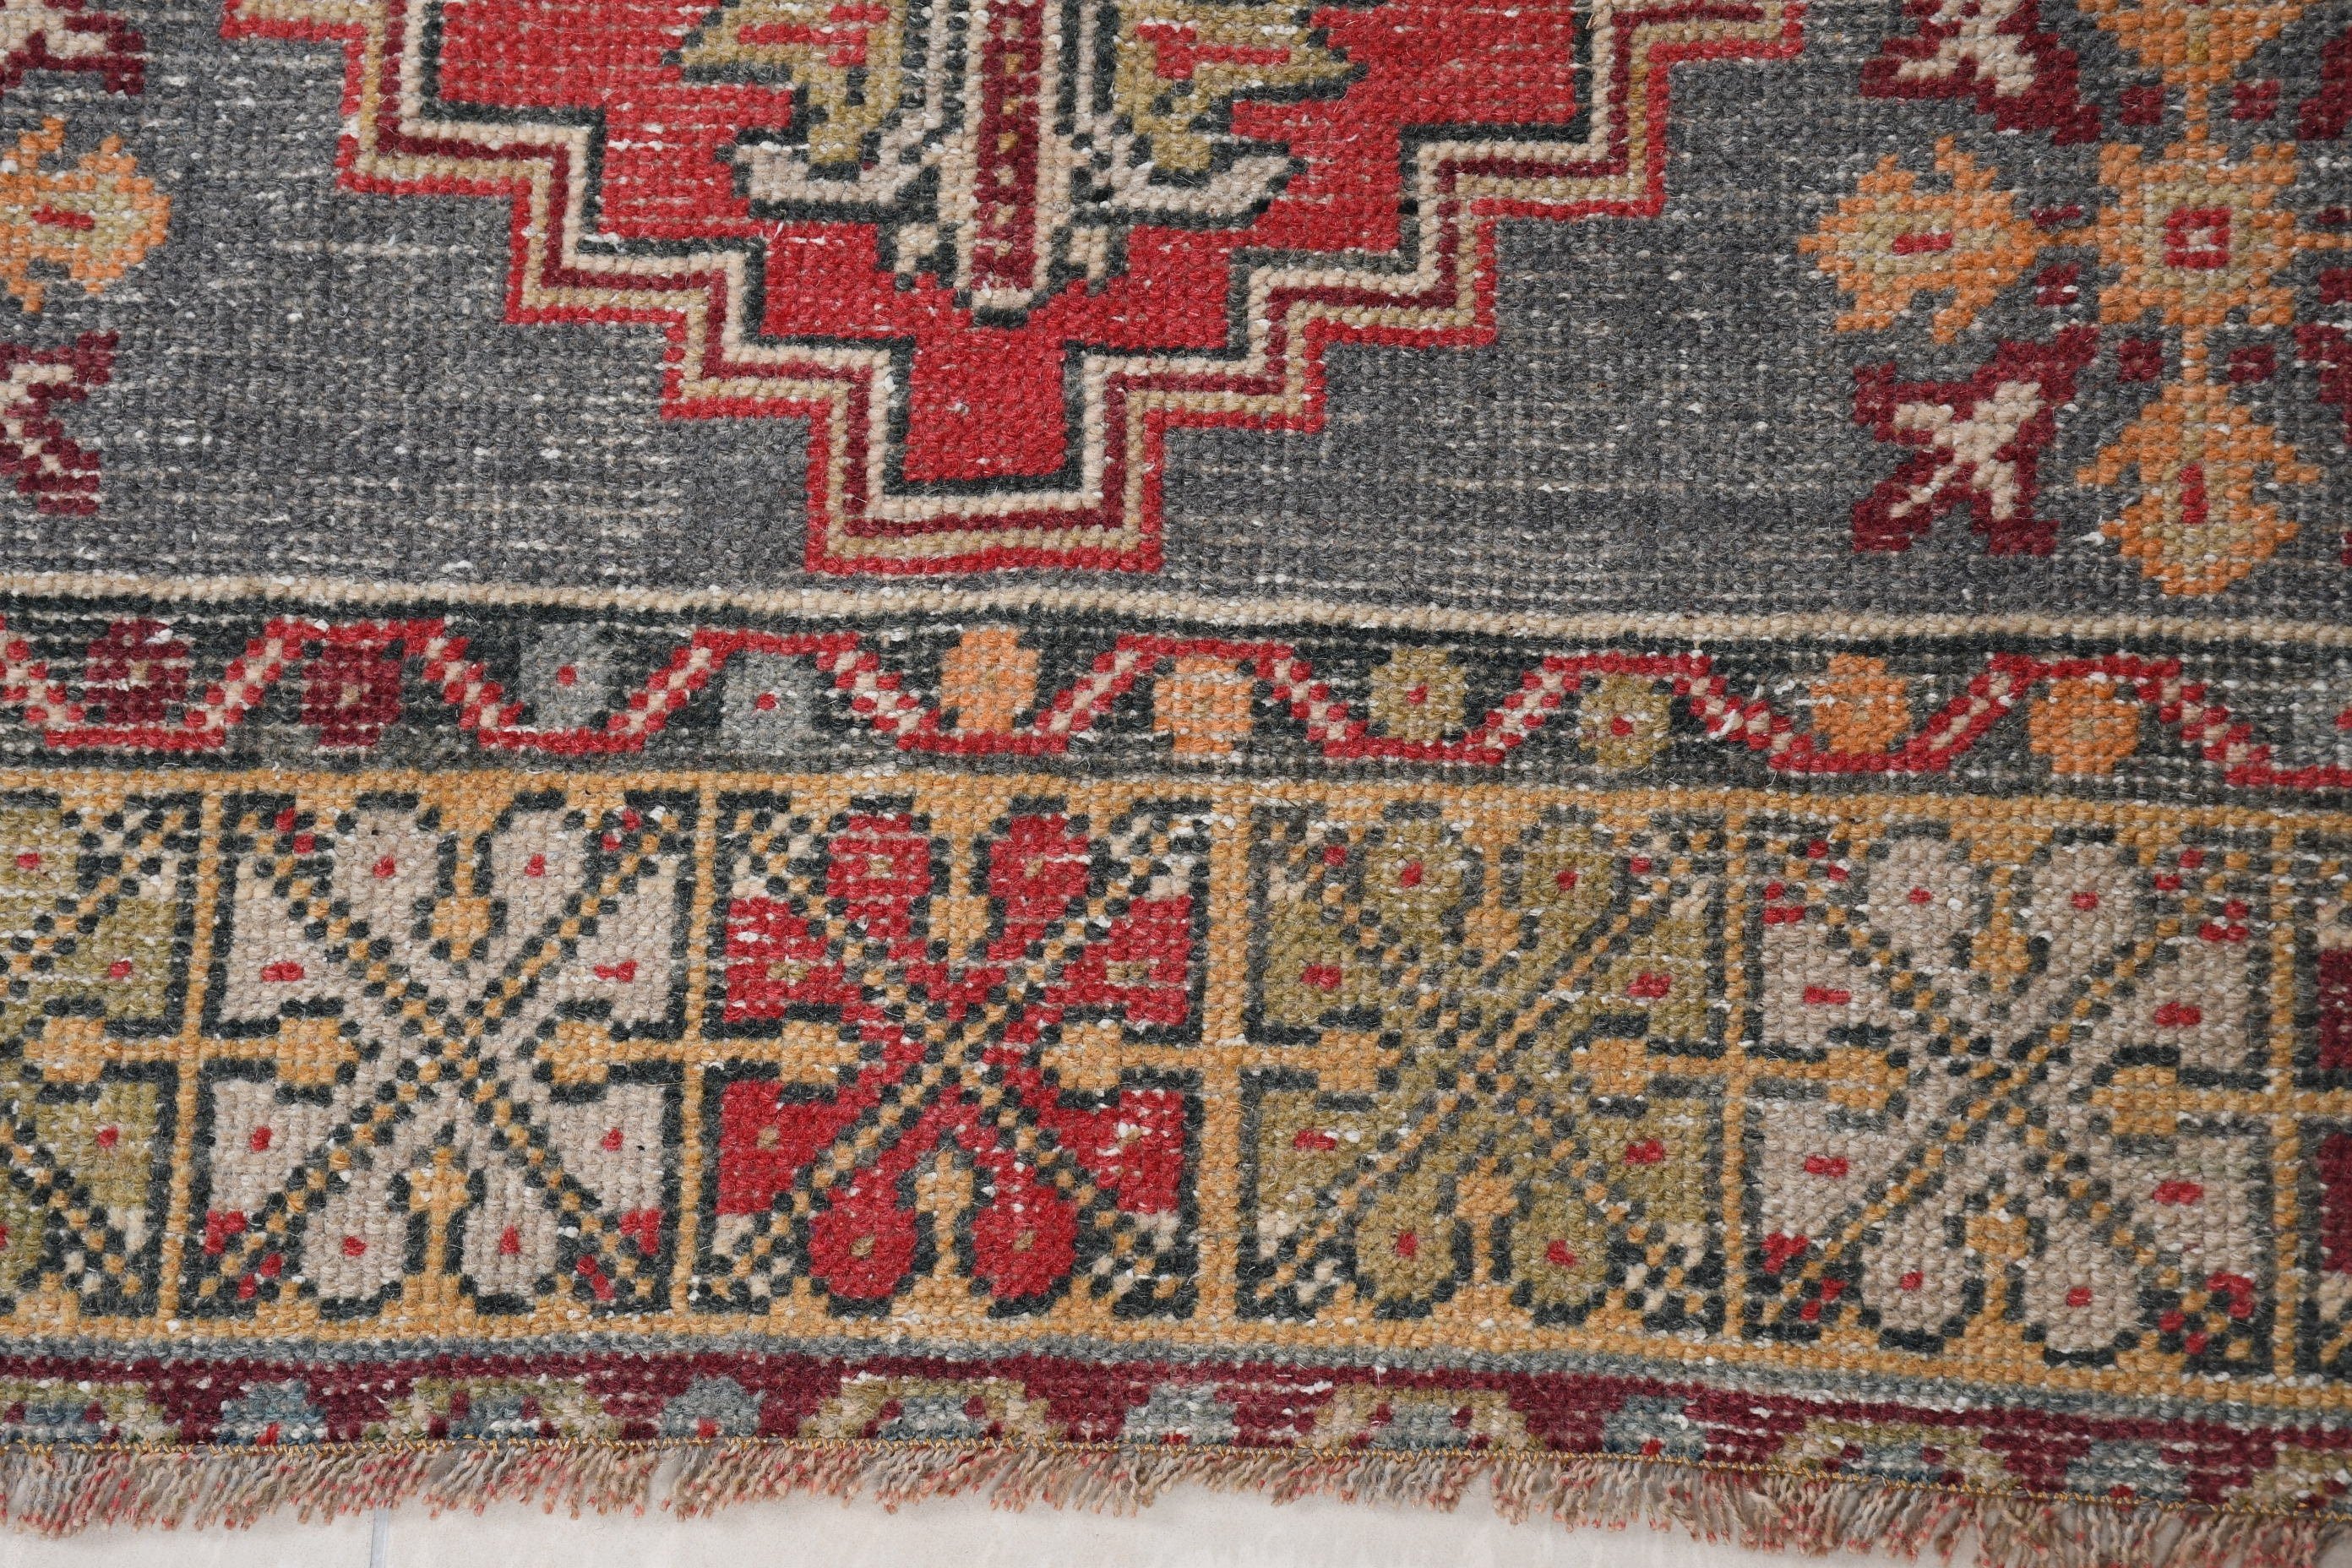 Ethnic Rugs, Red Moroccan Rug, Vintage Rug, Turkish Rugs, Rugs for Bedroom, Bedroom Rugs, Nursery Rug, Oushak Rug, 3.3x5.6 ft Accent Rug